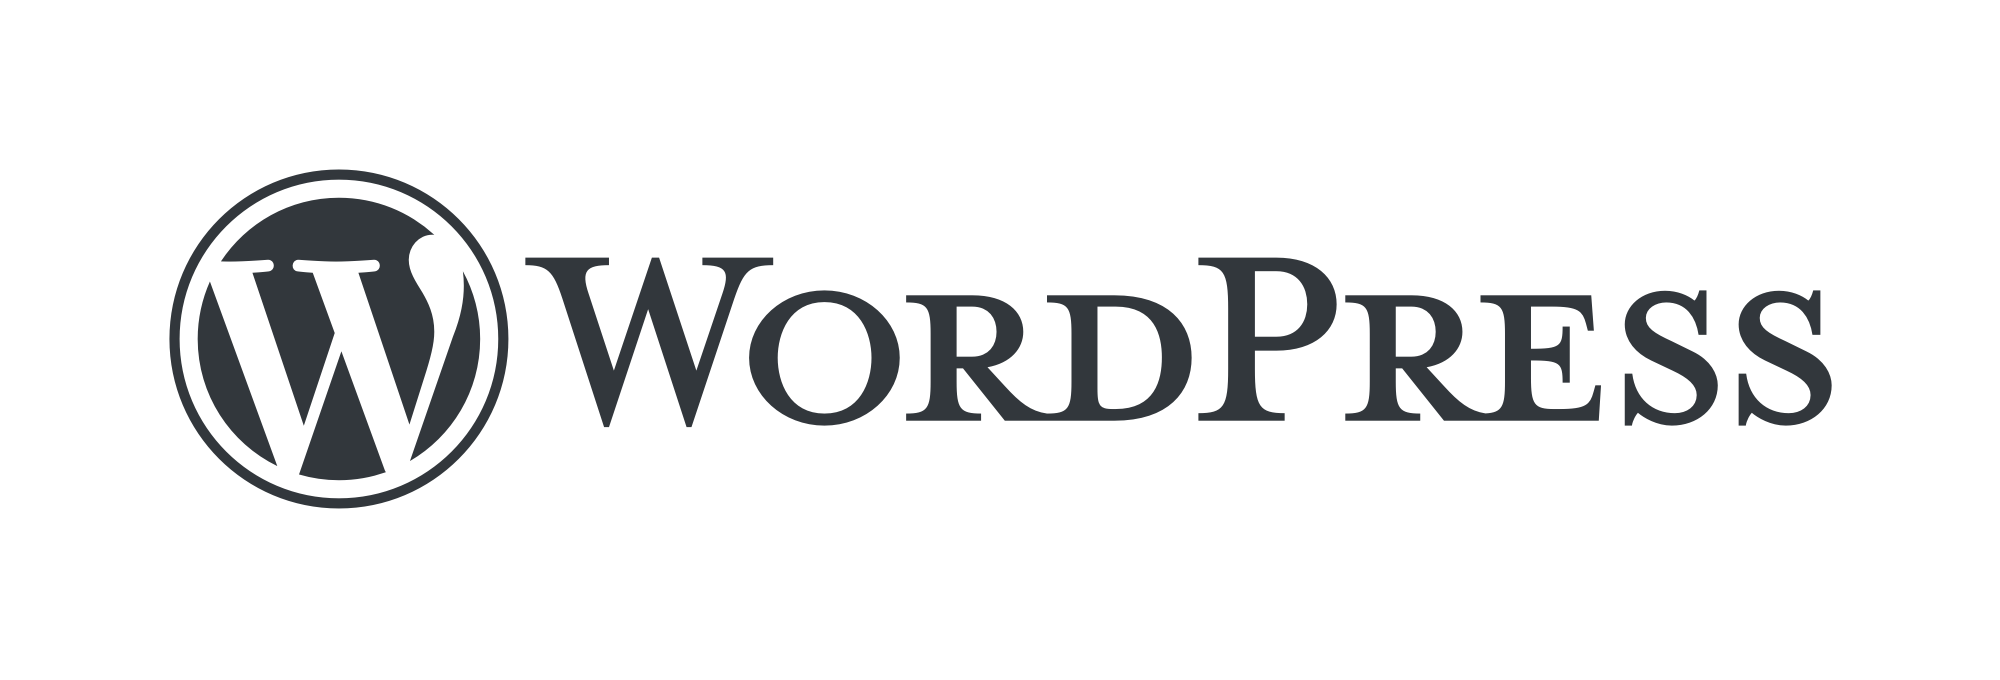 QBCommerce-WordPress-logo